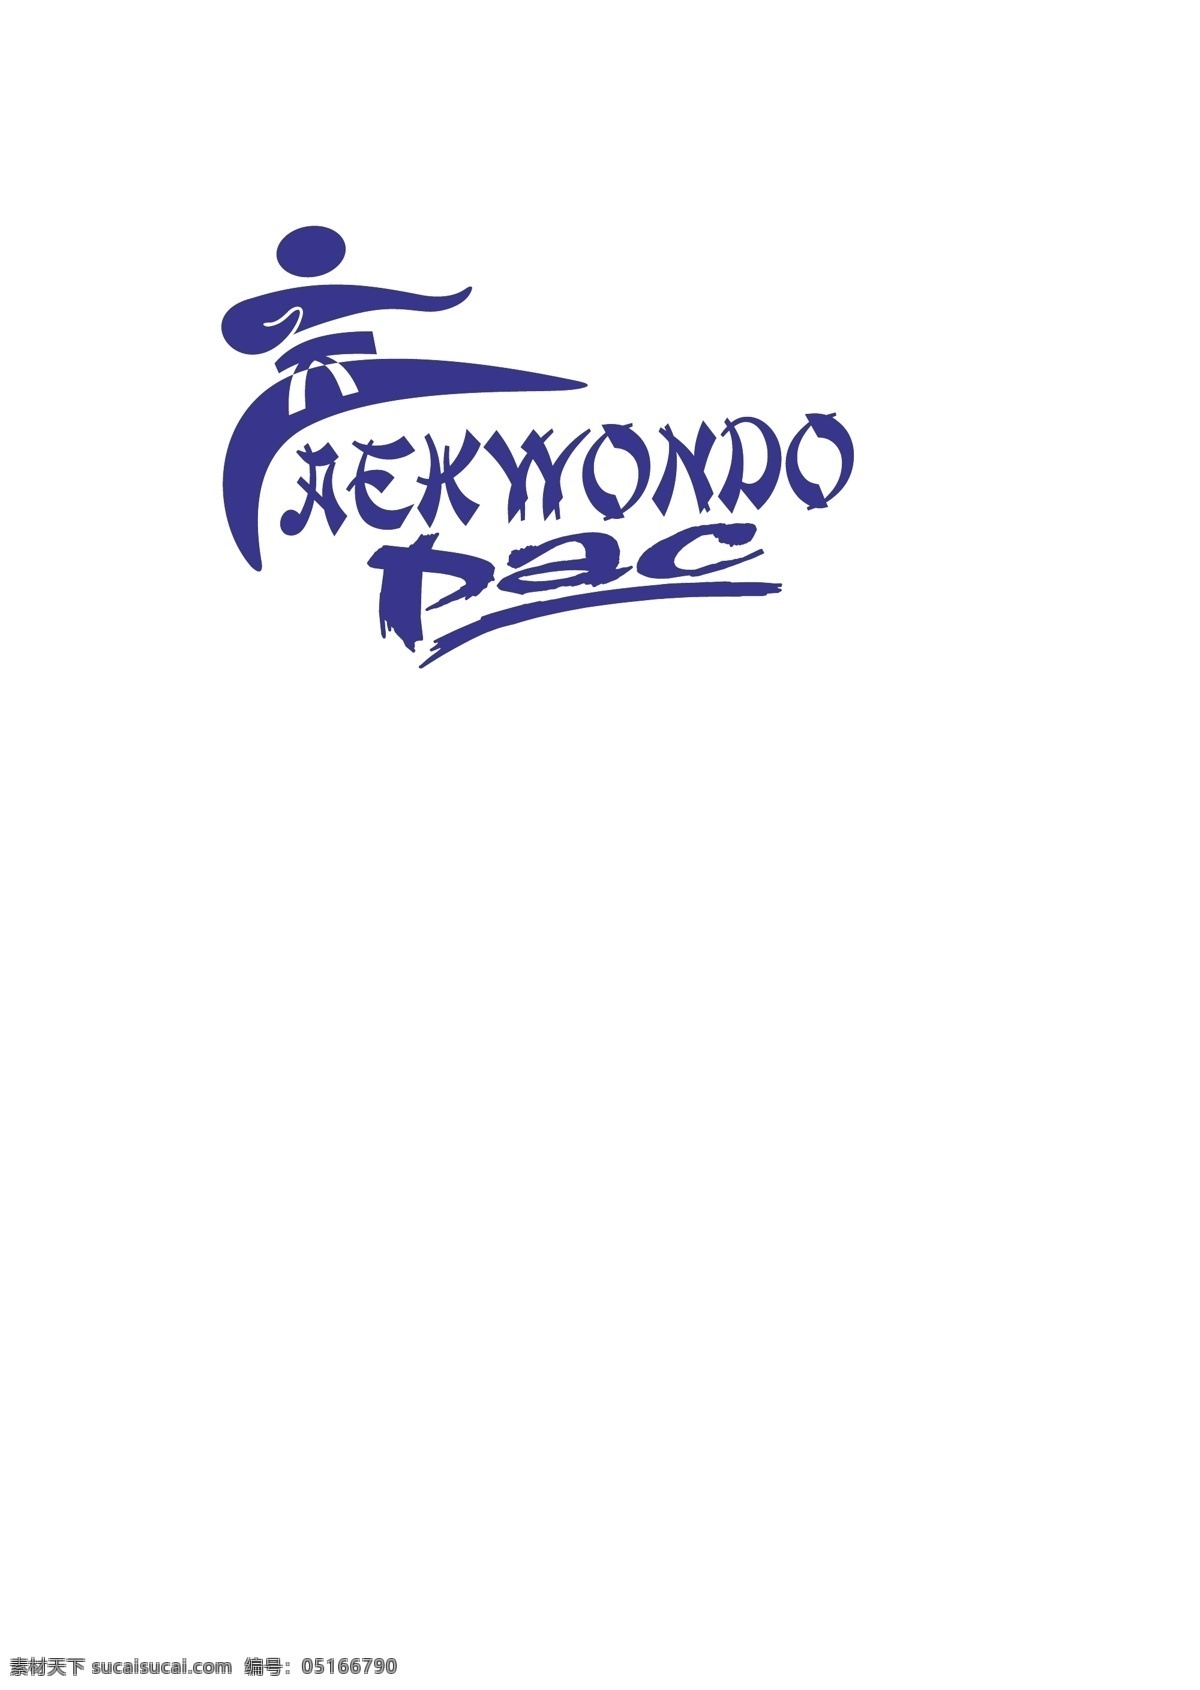 logo大全 logo 设计欣赏 商业矢量 矢量下载 taekwondopac 体育 标志设计 欣赏 网页矢量 矢量图 其他矢量图